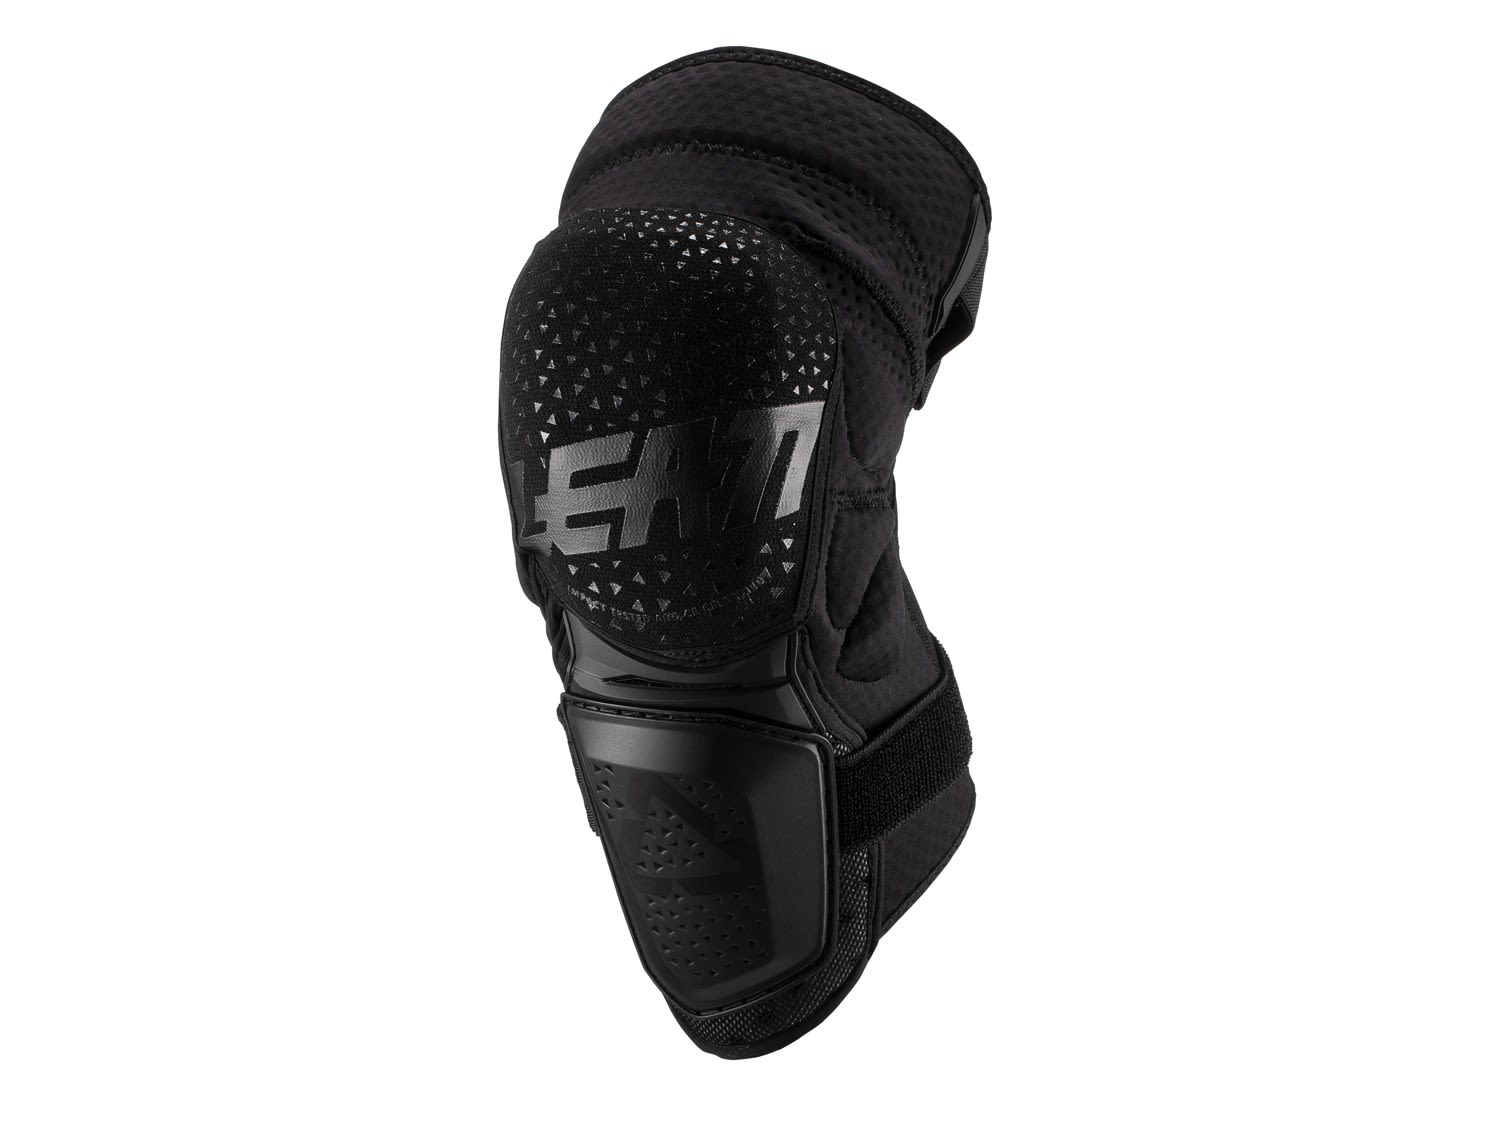 Leatt Knee Guard 3DF Hybrid Schwarz- Knieprotektoren- Grsse S-M - Farbe Black